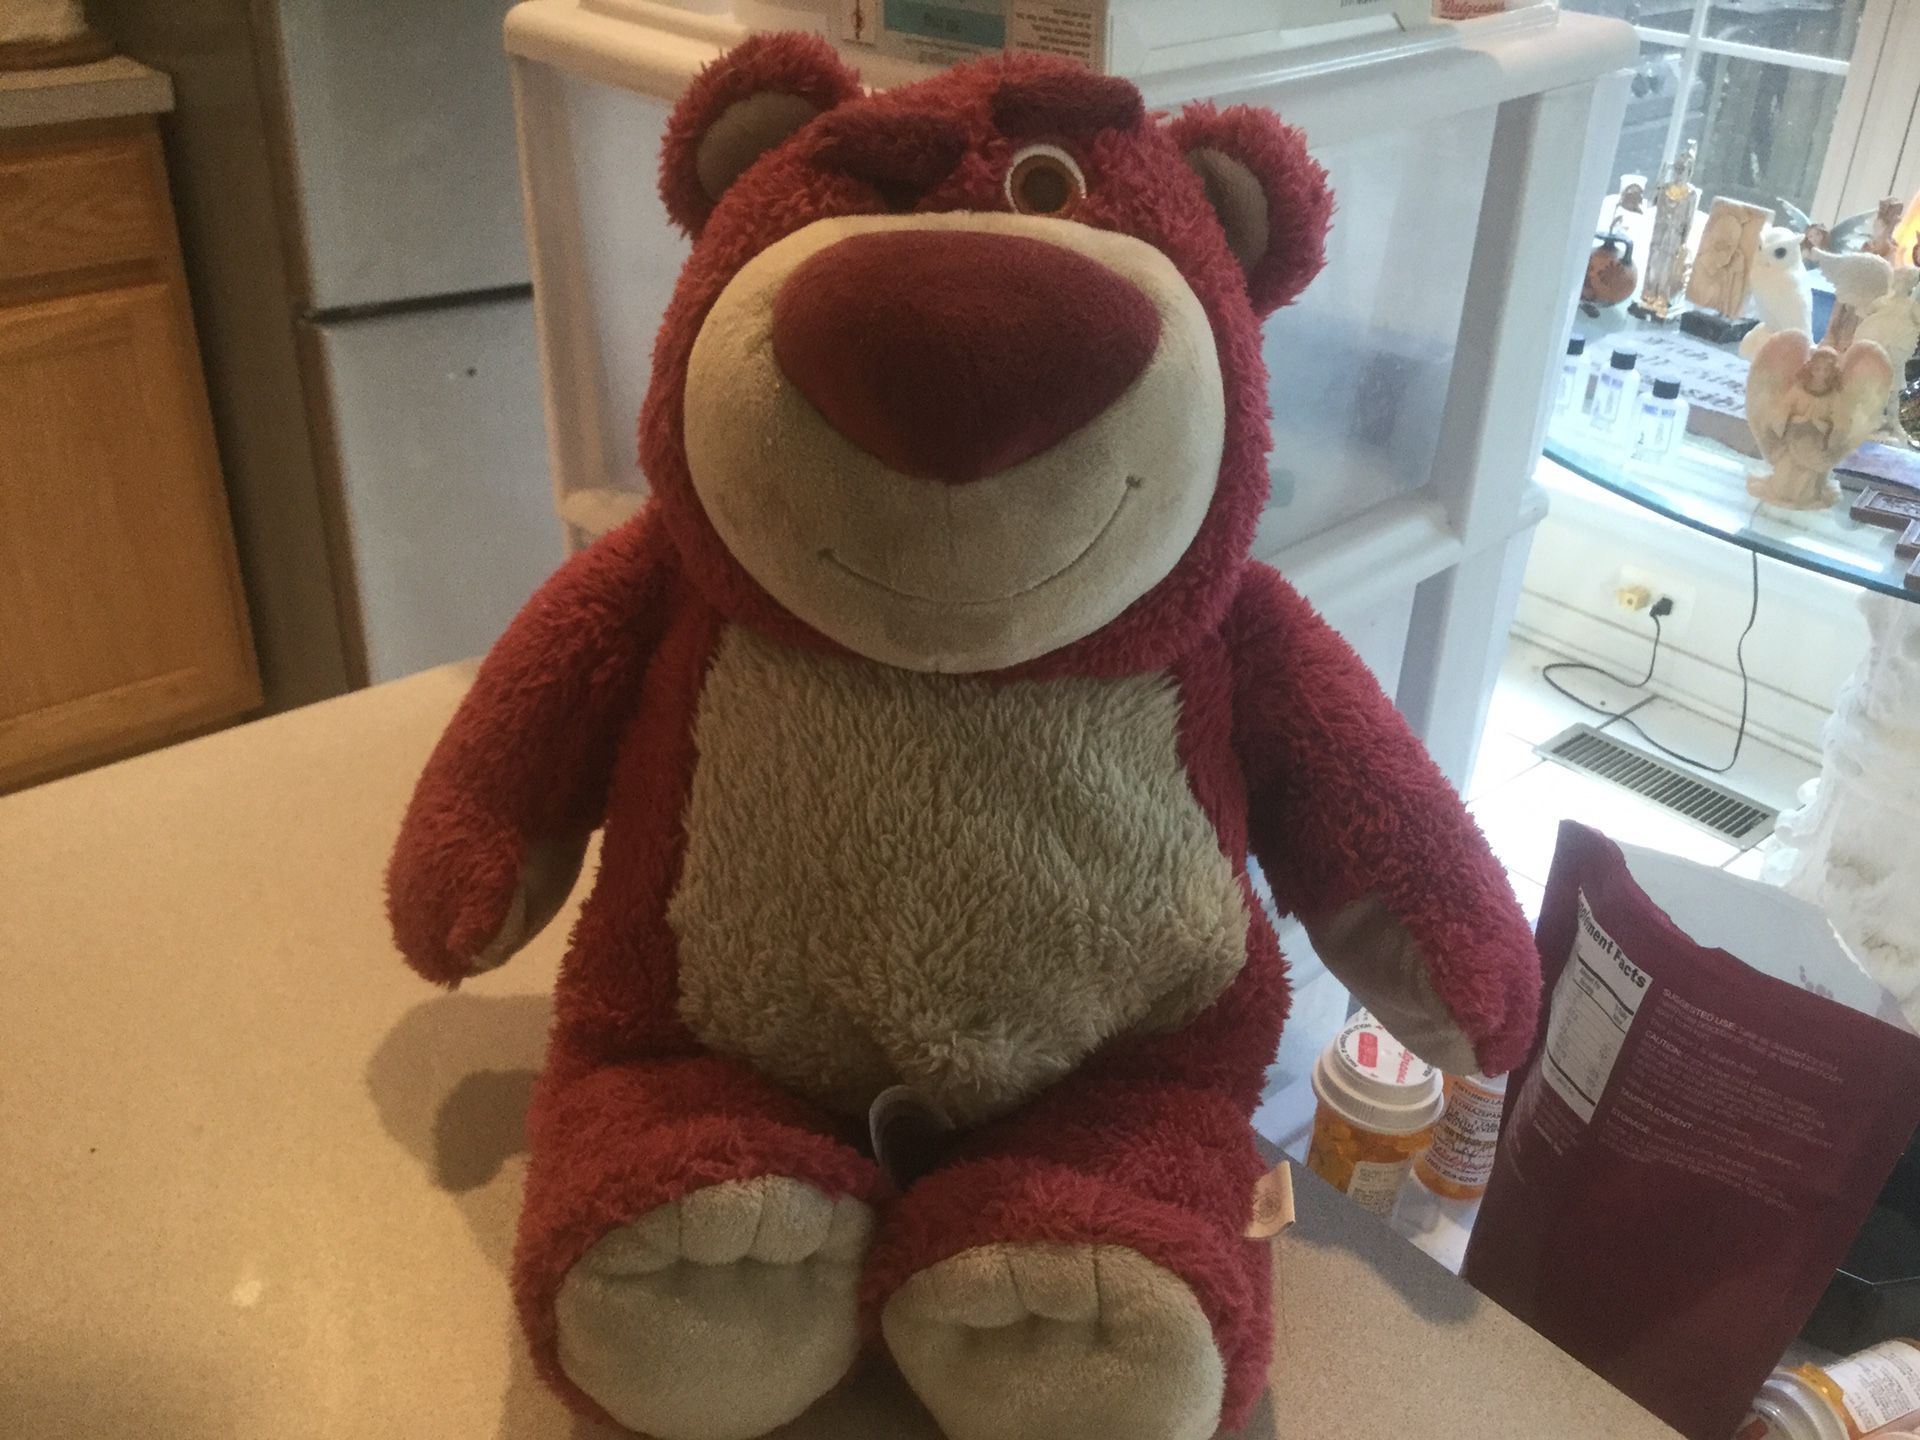 Stuffed toy bear smells like strawberries